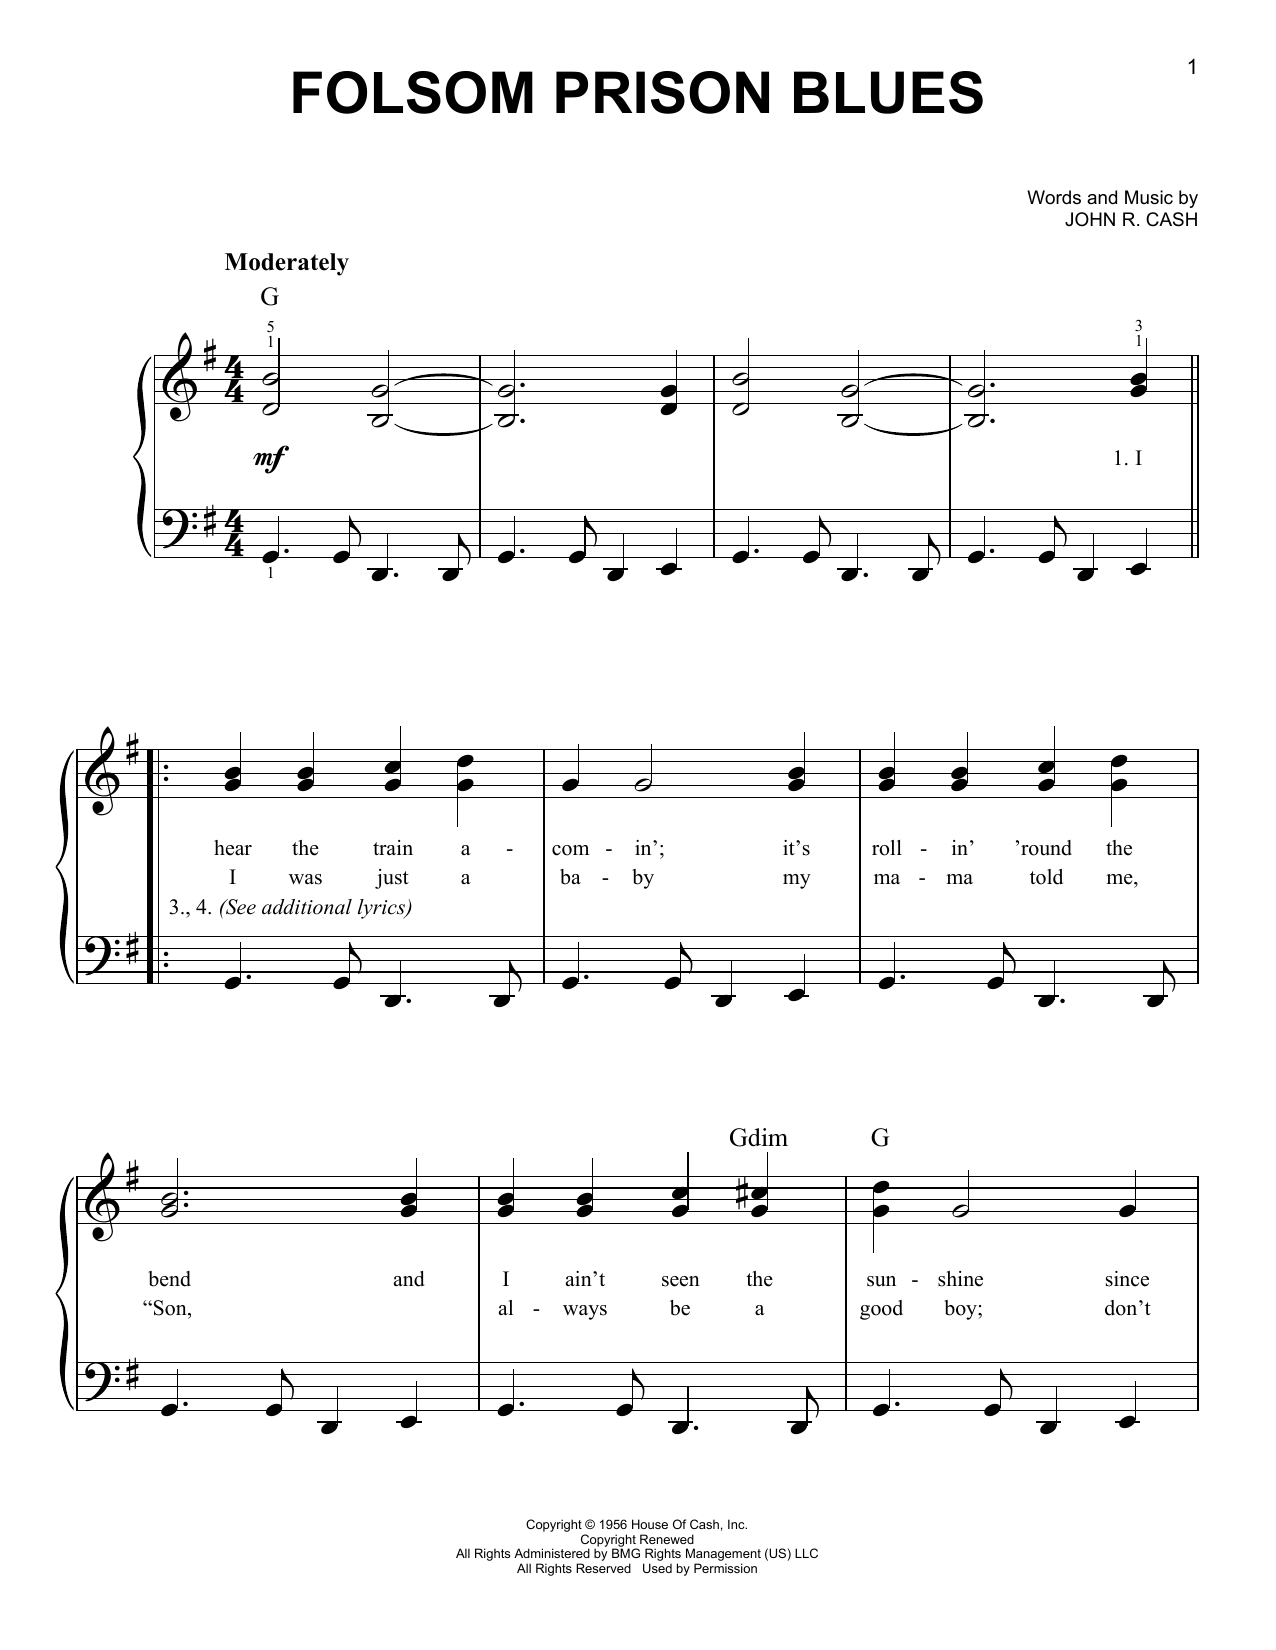 Johnny Cash Folsom Prison Blues Sheet Music Notes & Chords for Melody Line, Lyrics & Chords - Download or Print PDF